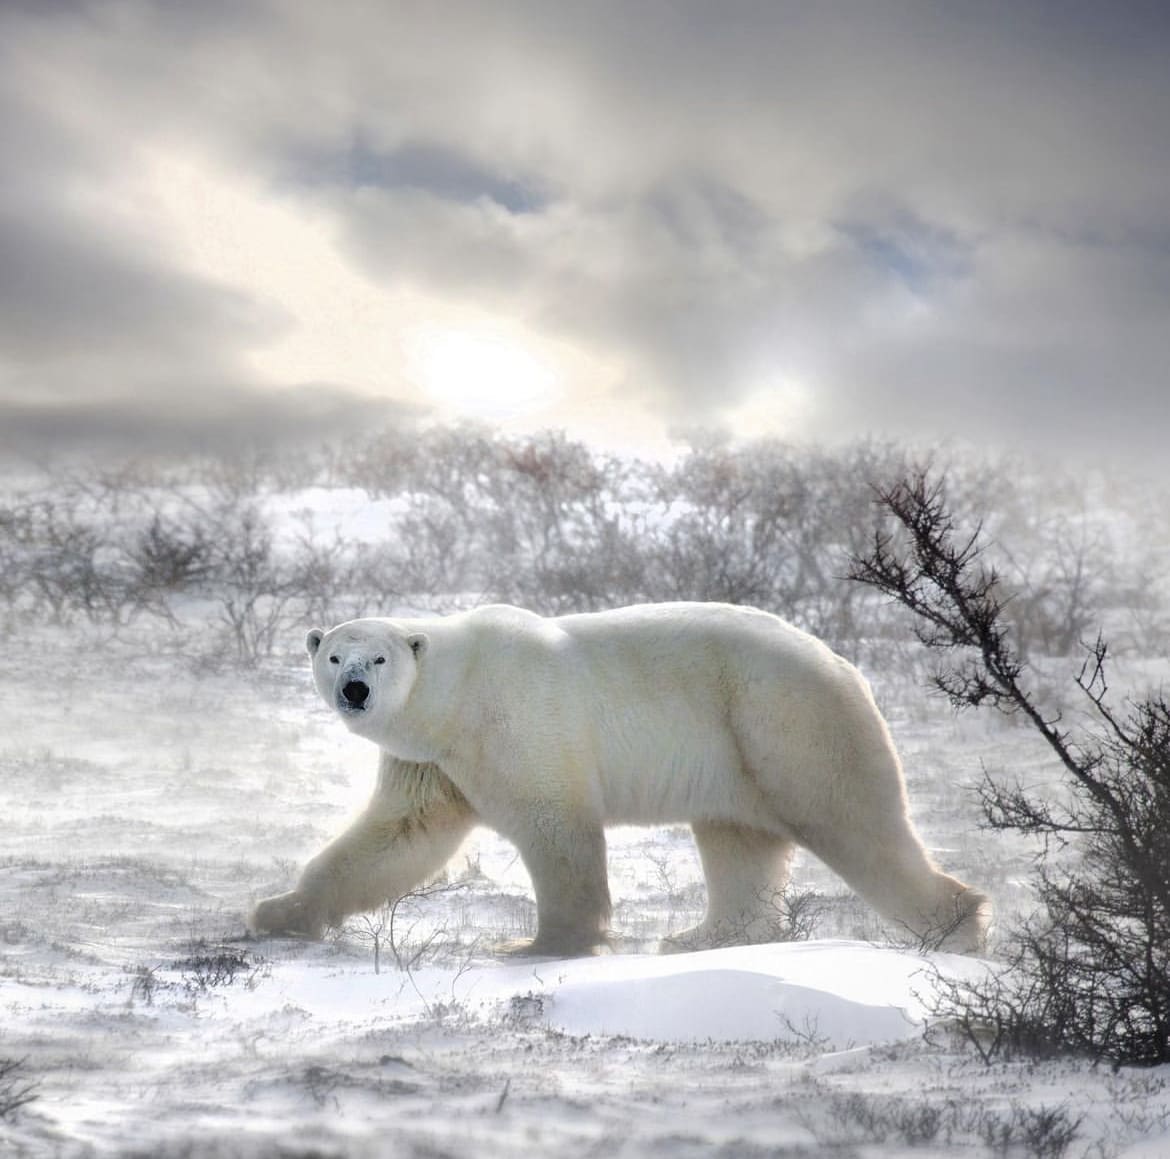 Polar bear roaming through a barren, snowy forest